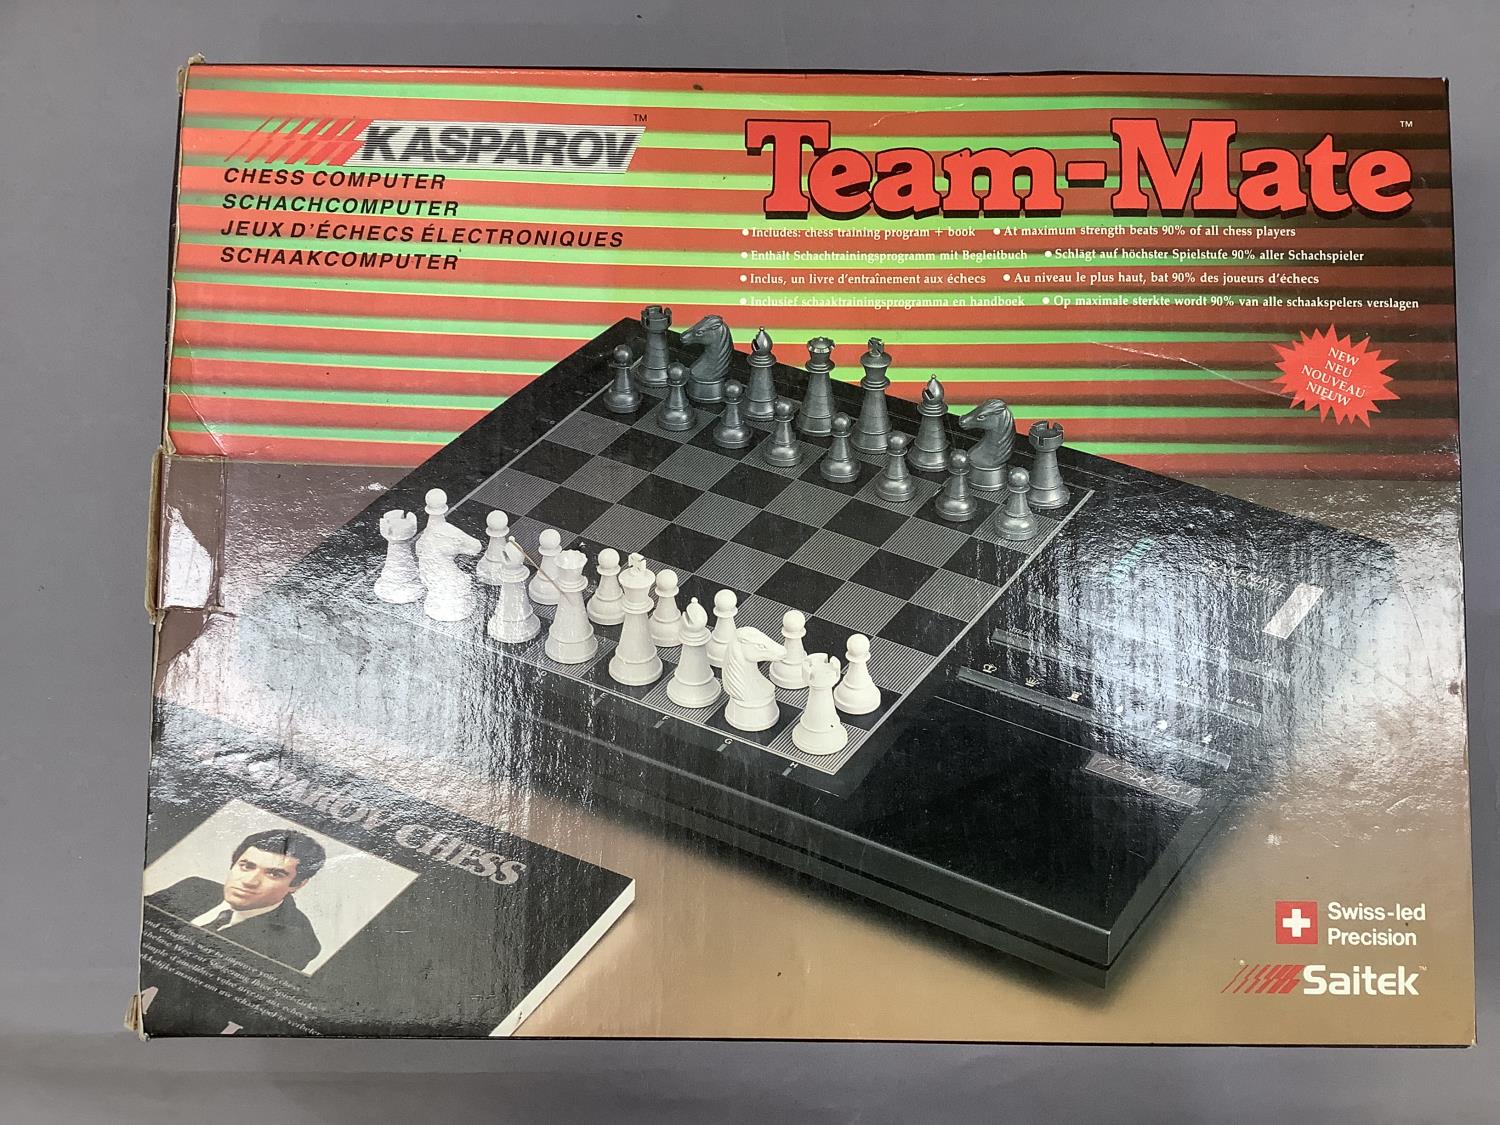 A Team-Mate Kasperov chess computer by Saitek, boxed - Image 2 of 3